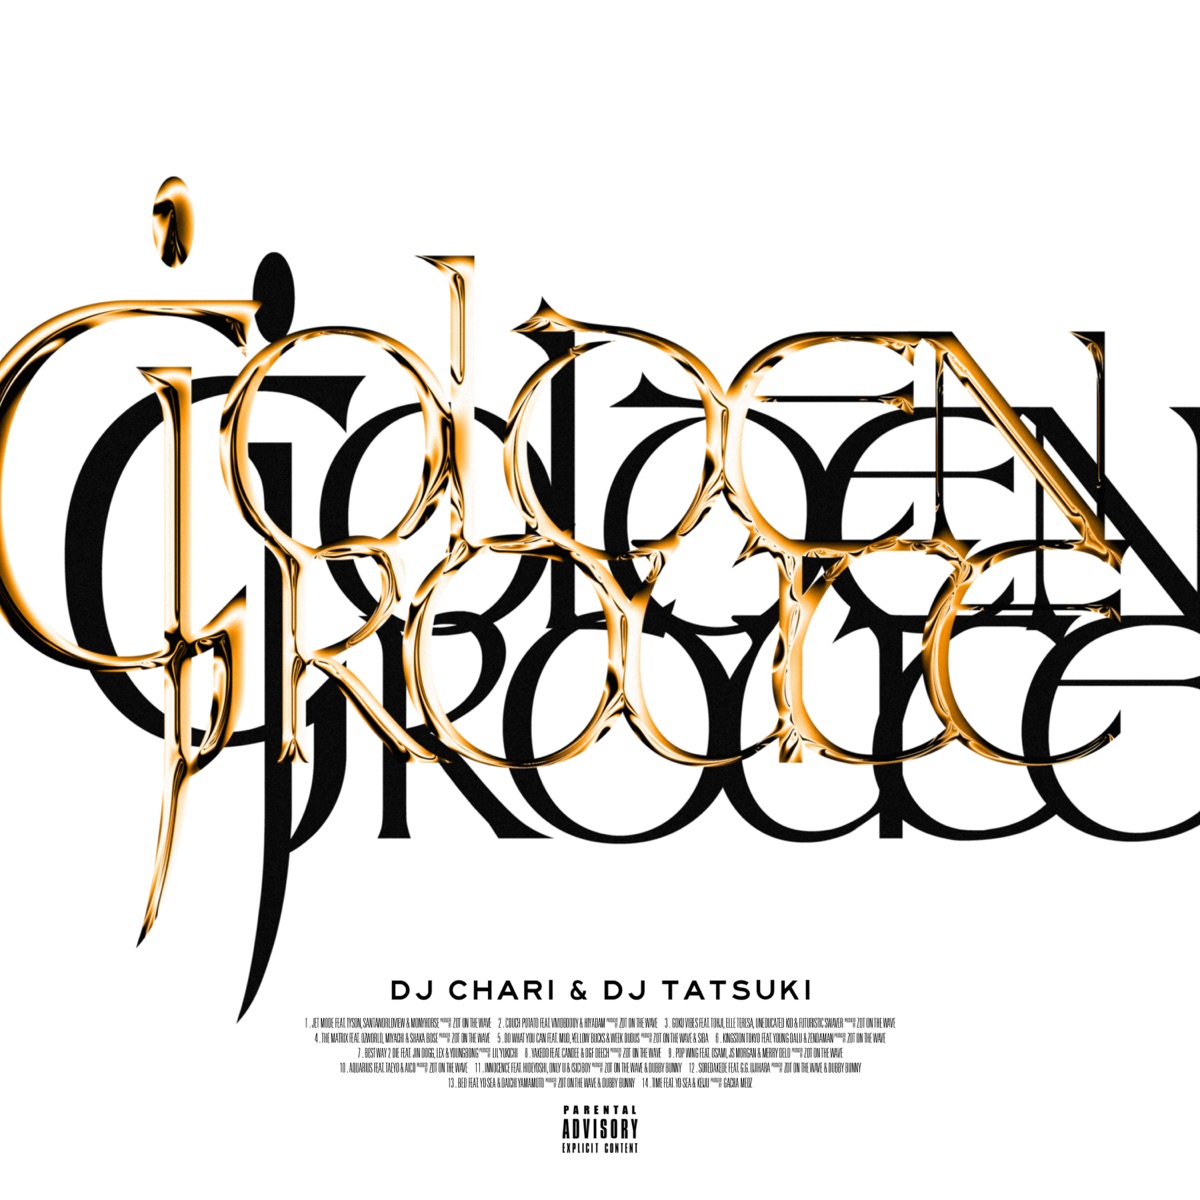 『DJ CHARI & DJ TATSUKI - COUCH POTATO (feat. vividboooy & HIYADAM) 歌詞』収録の『GOLDEN ROUTE』ジャケット